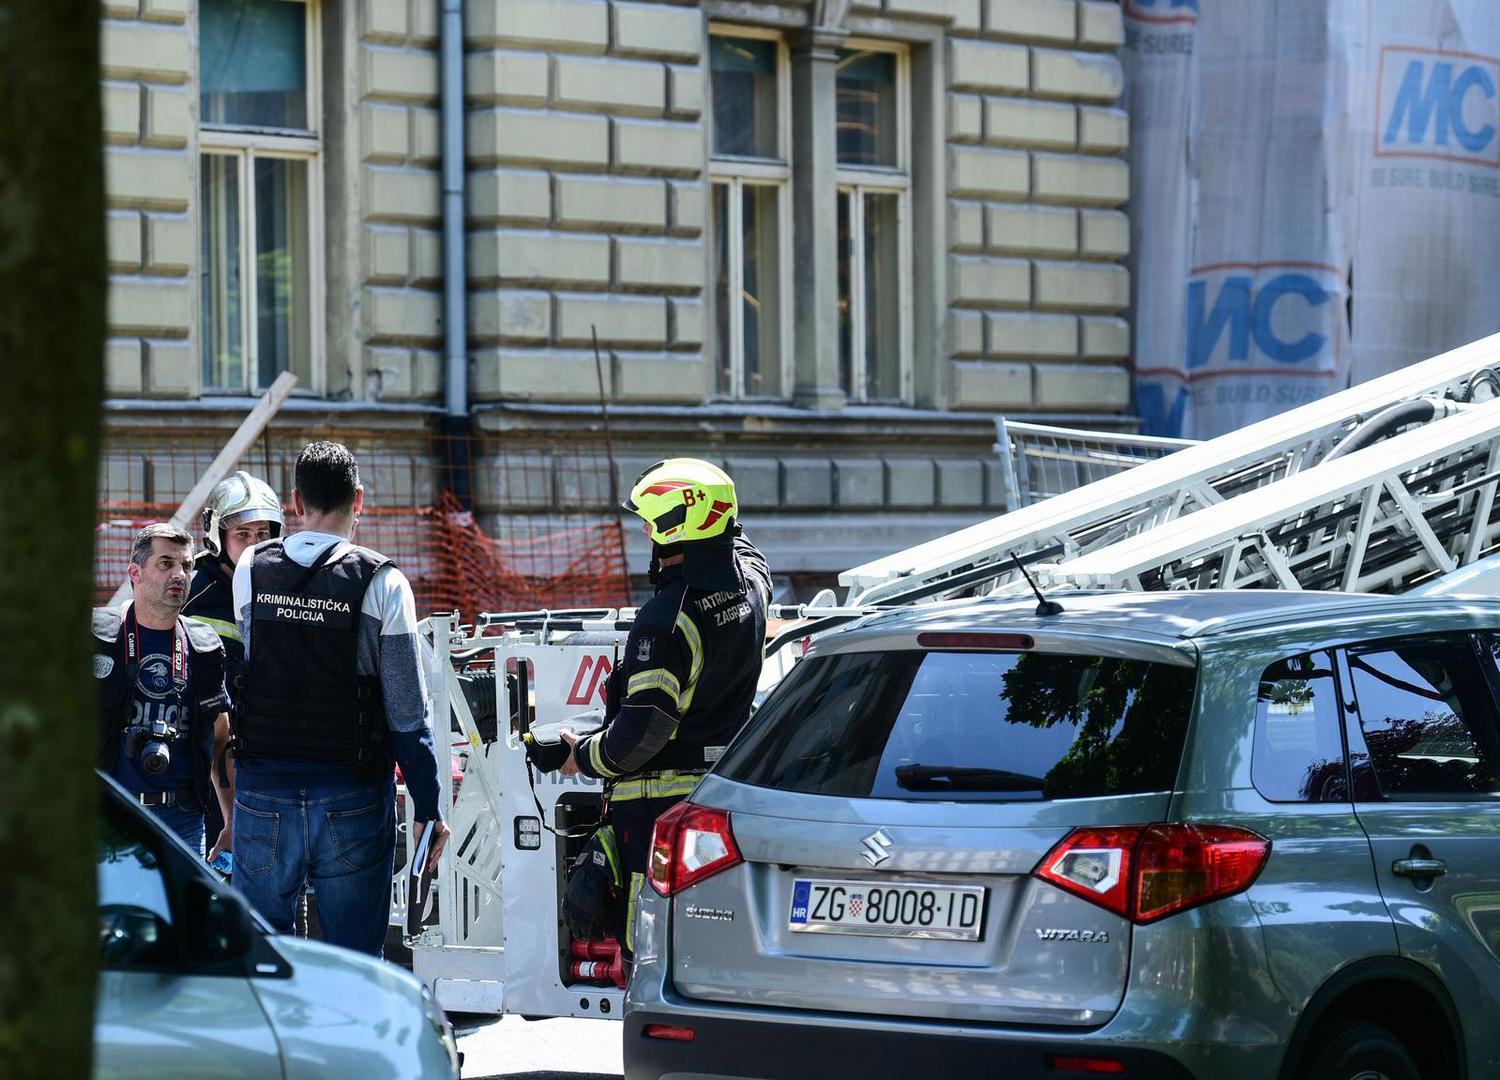 25.5.2023., Zagreb - Prilikom radova na zgradi na Zrinjevcu radnik je ozlijedjen u eksploziji. Policija i vatrogasci na terenu.  Photo: Neva Zganec/PIXSELL